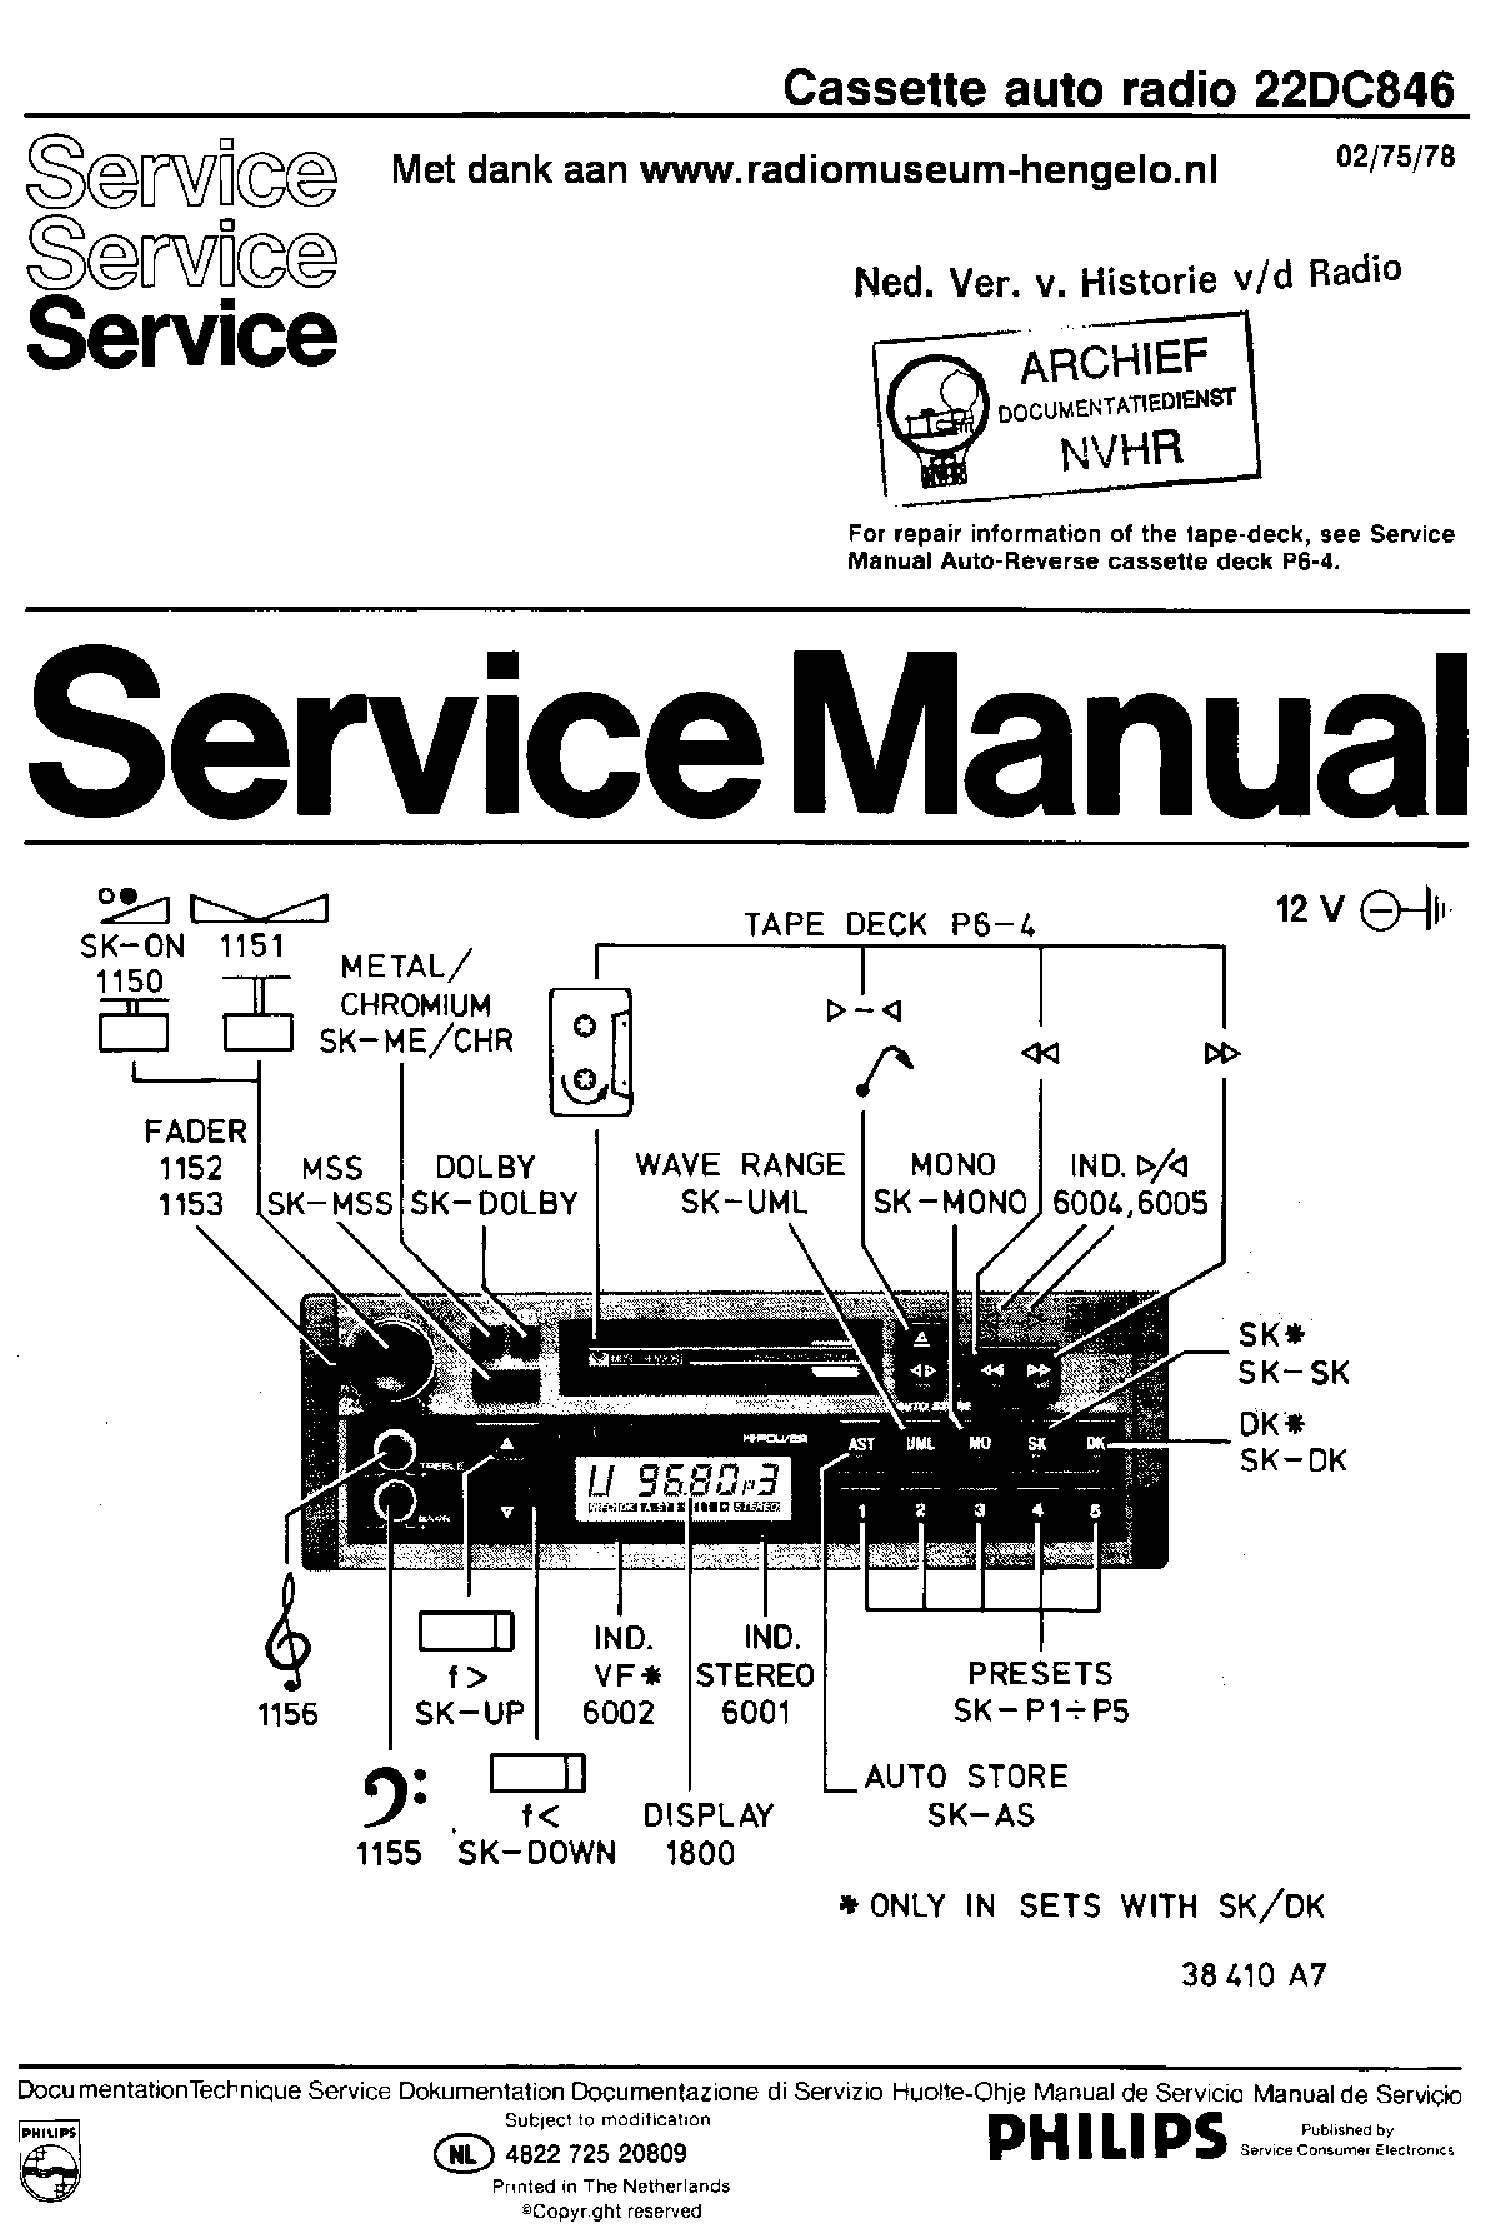 PHILIPS 22DC846 CASSETTE AUTO RADIO 1978 SM service manual (1st page)